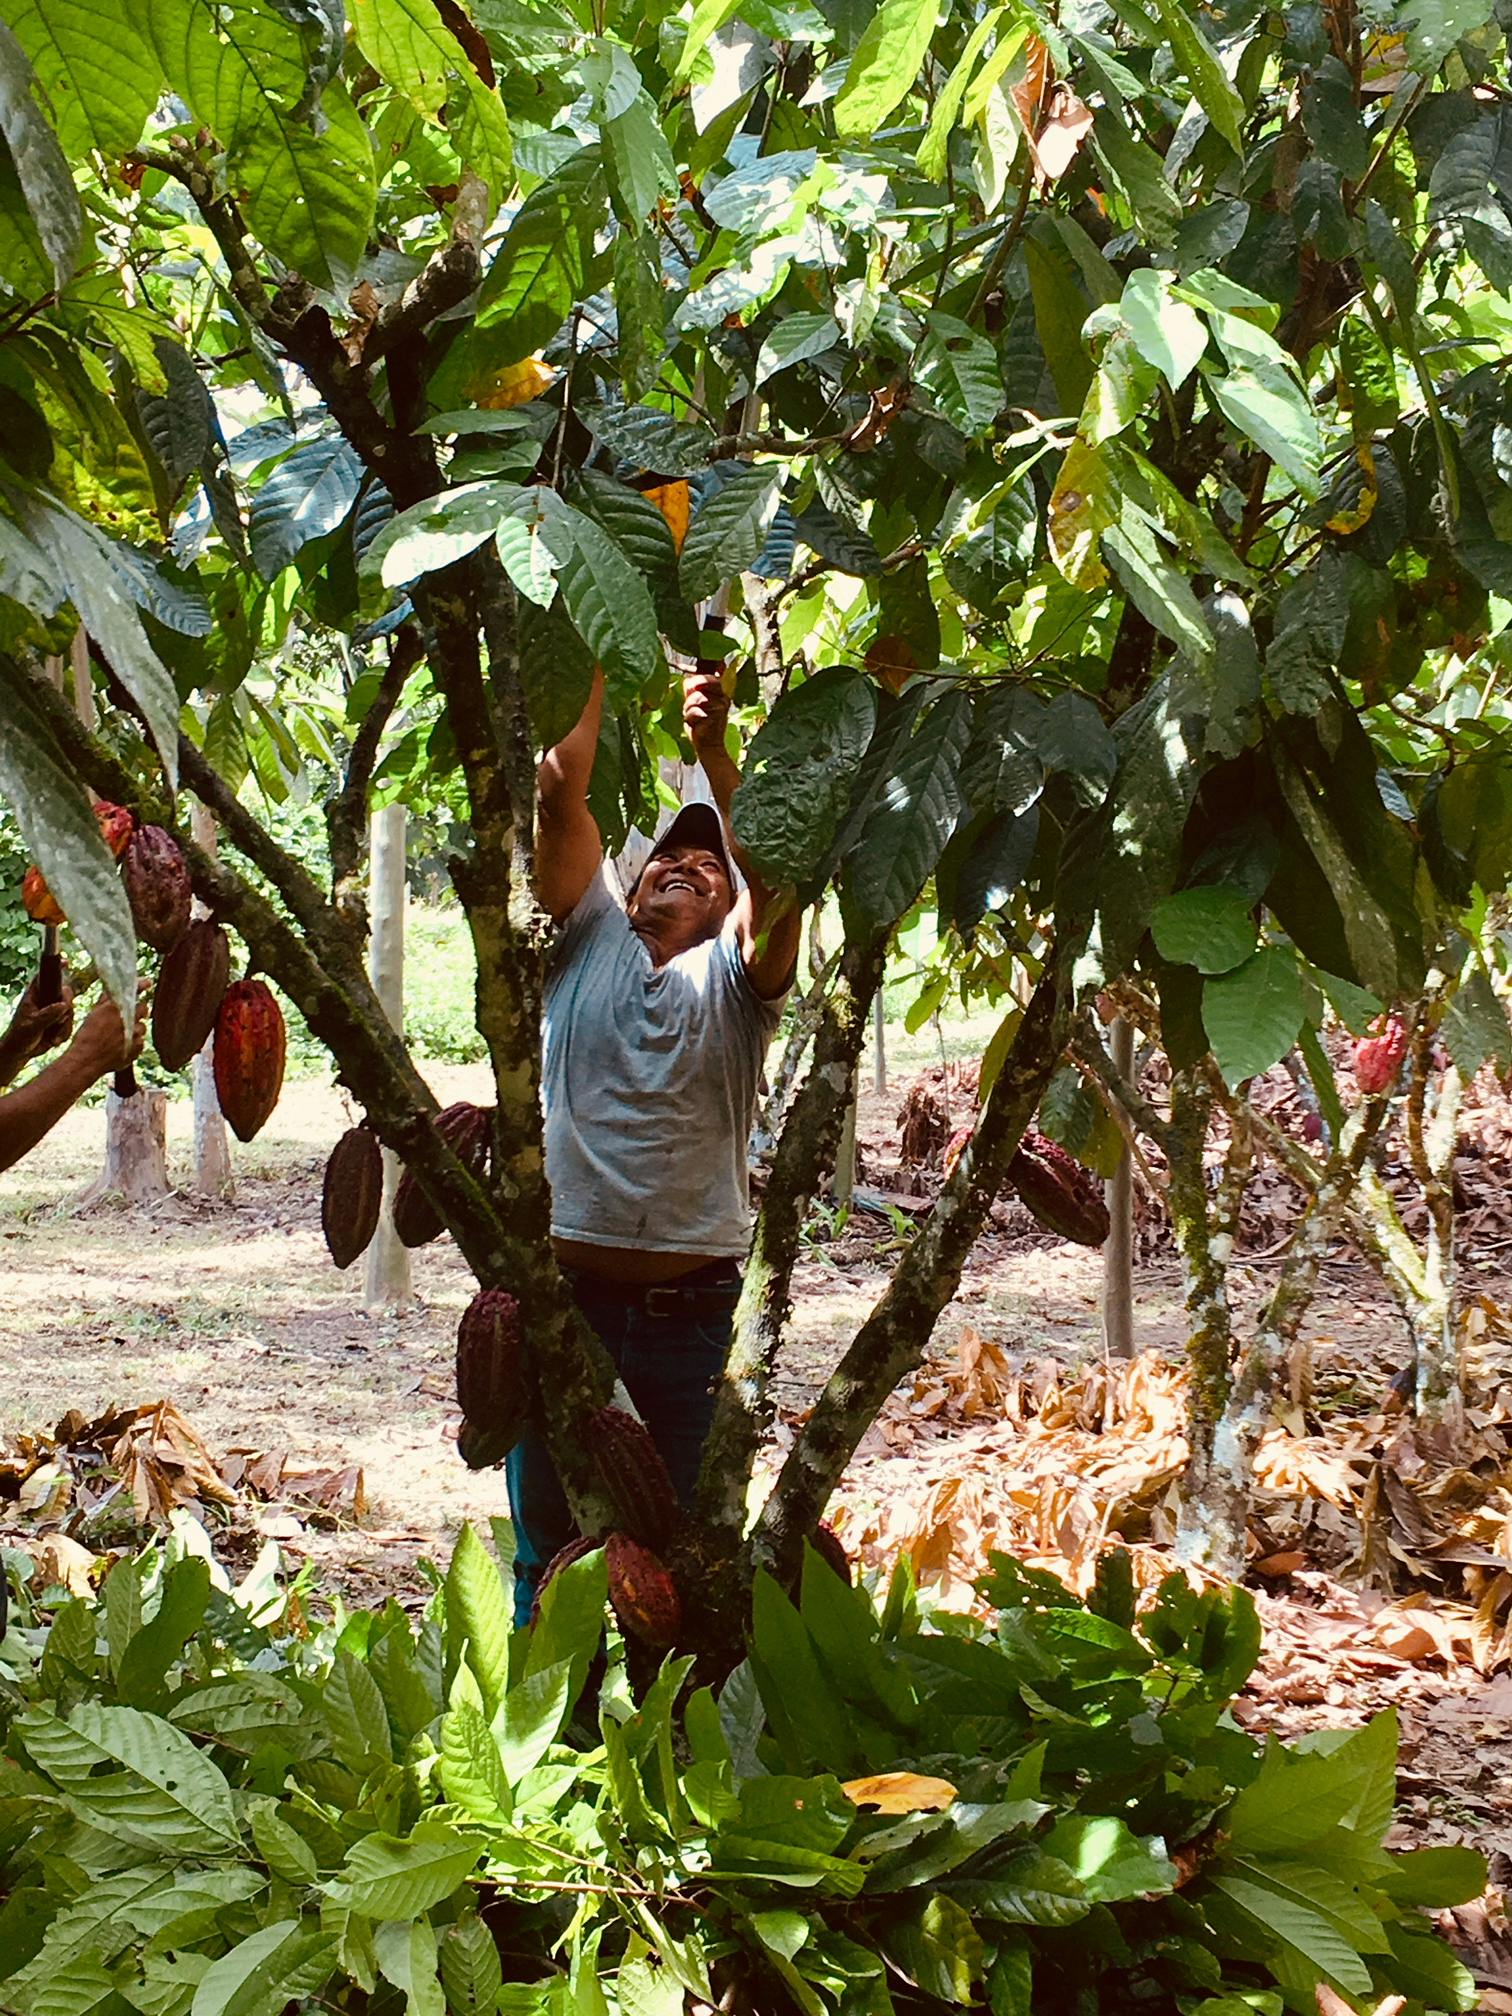 Farmer from Villa Andina Farm harvesting cacao pods to make it into cacao